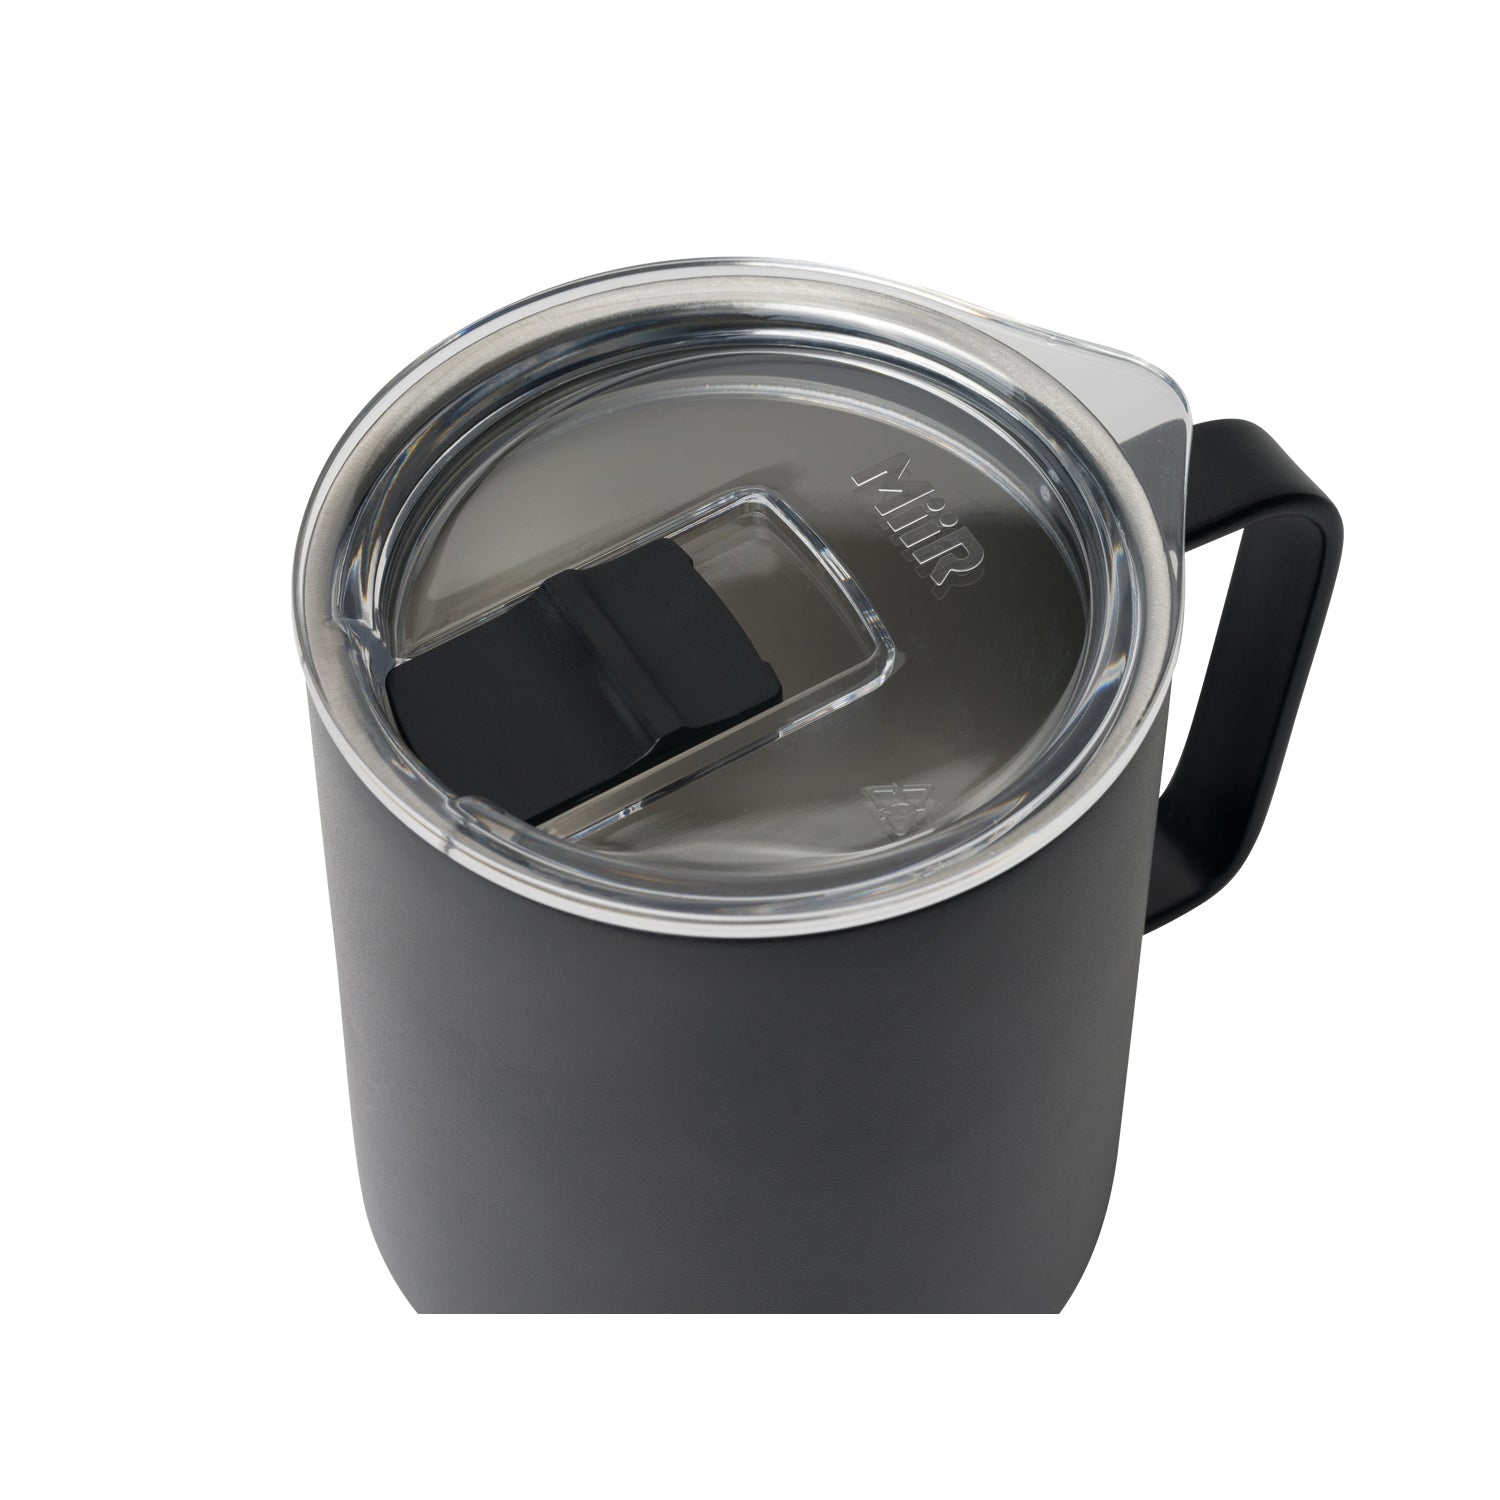 MIRA 12oz Stainless Steel Insulated Travel Mug for Coffee, Tea